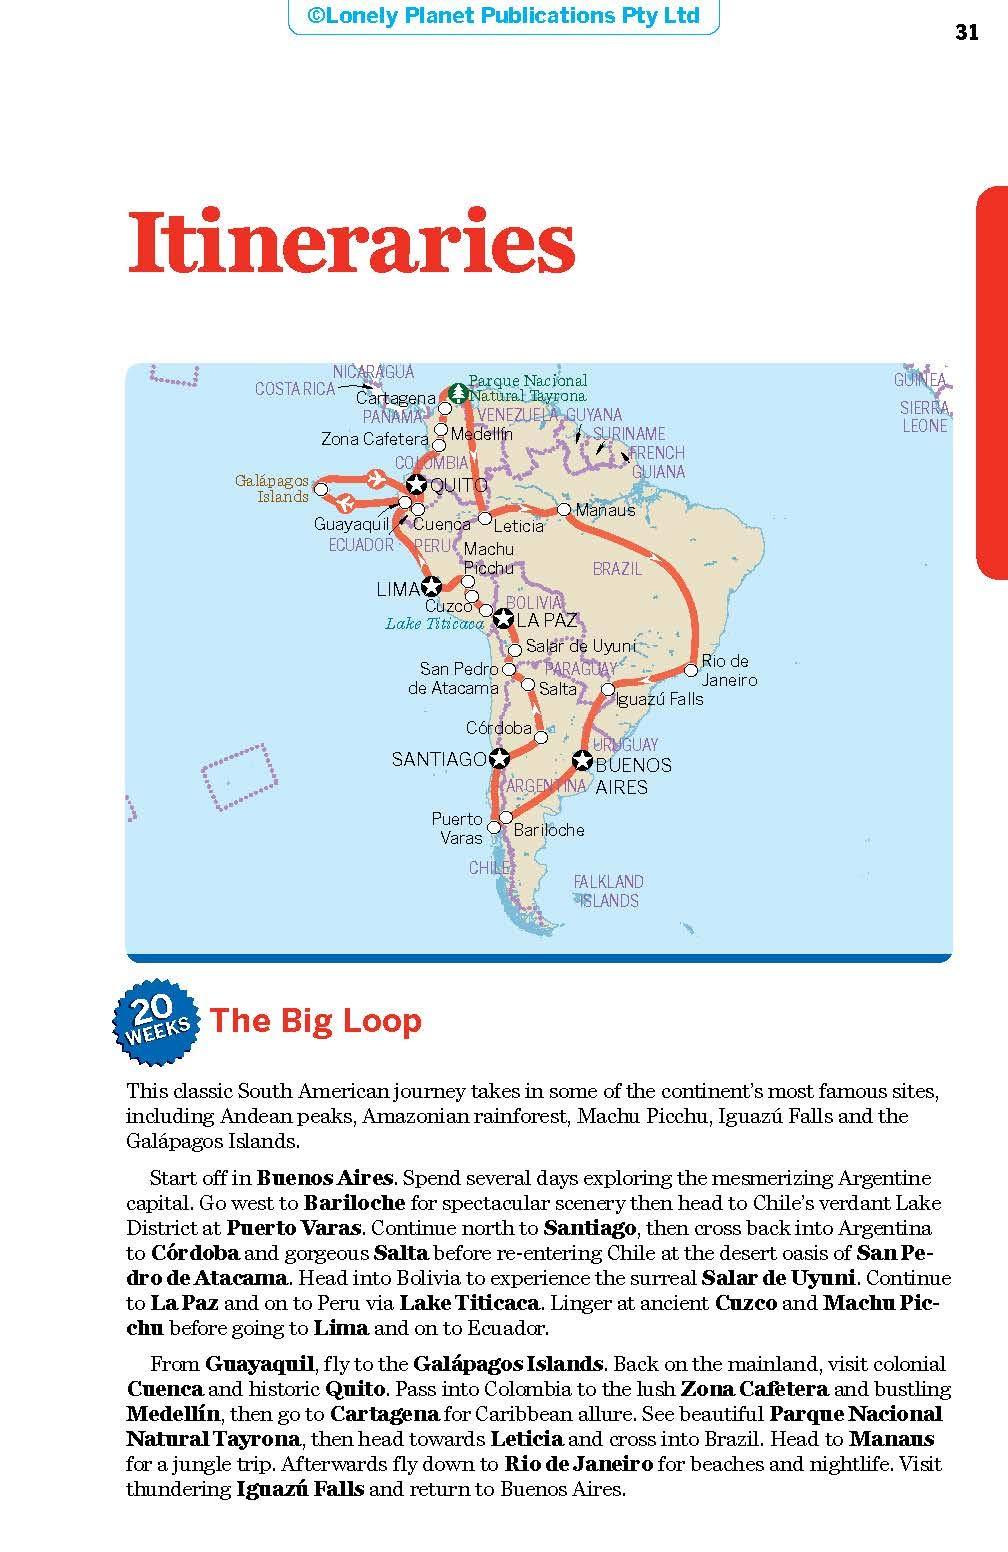 Guide de voyage (en anglais) - South America | Lonely Planet guide de voyage Lonely Planet 